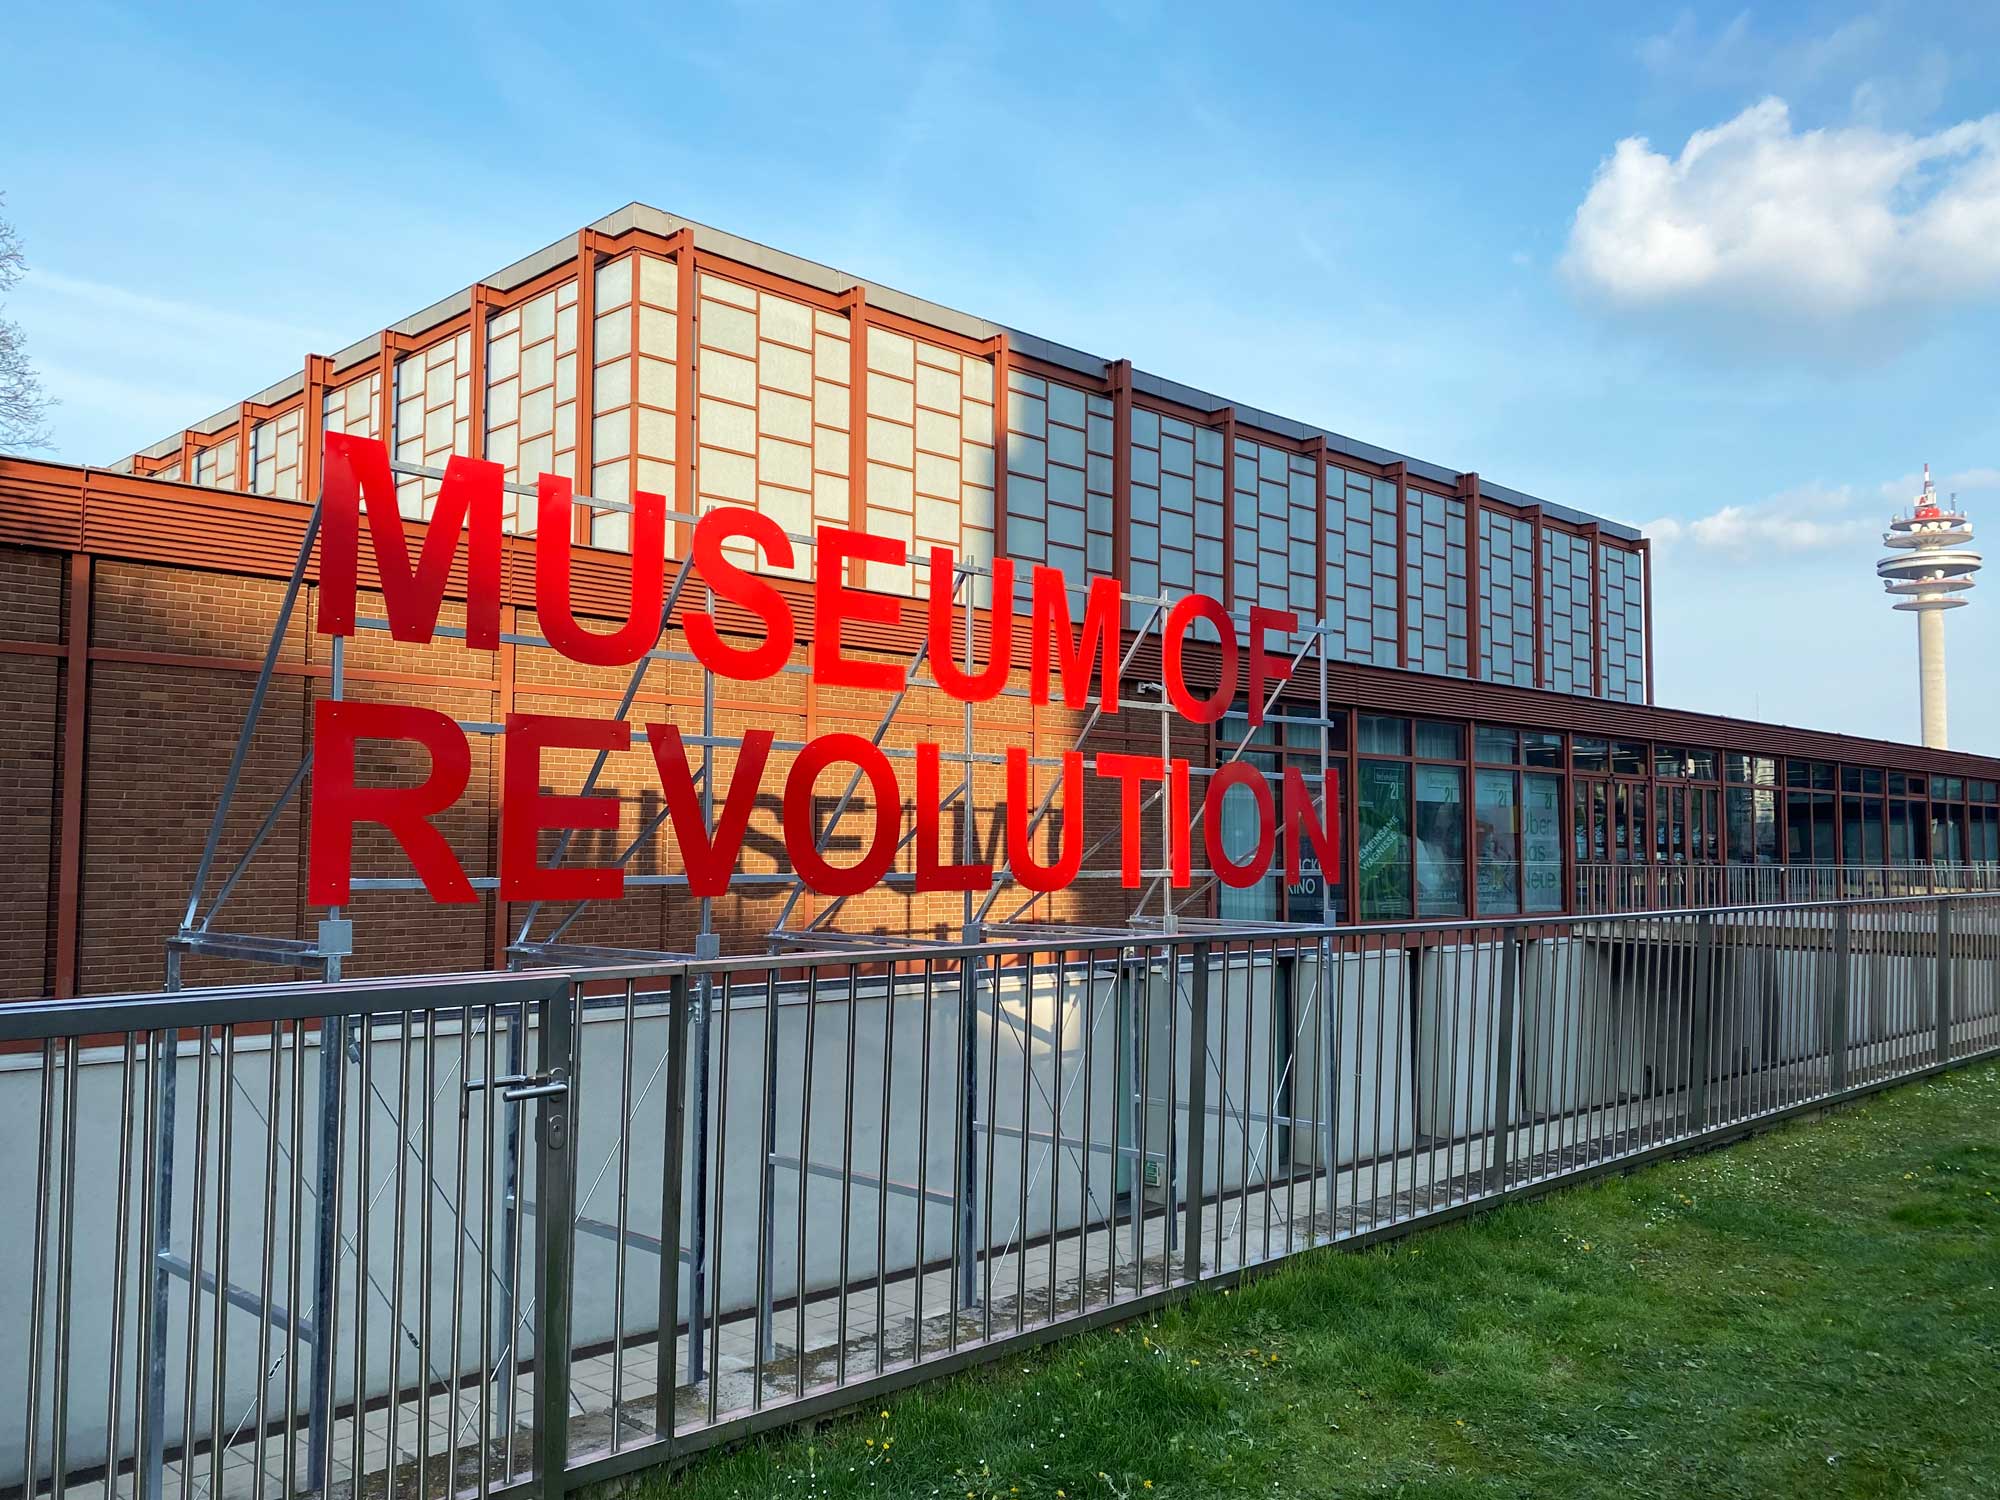 Museum of Revolution Belvedere21